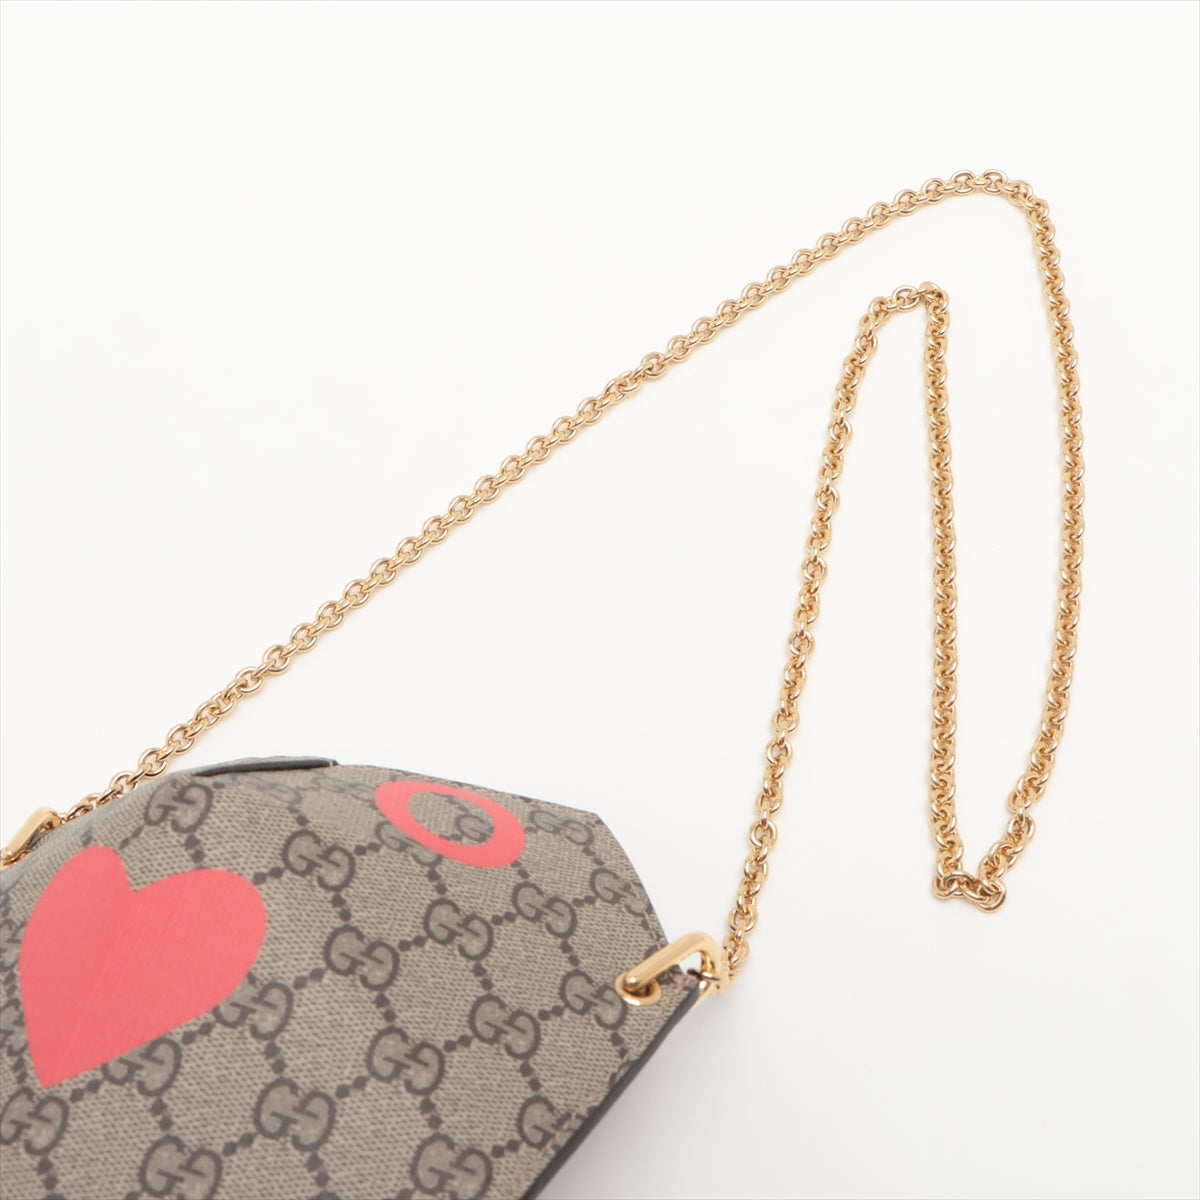 Gucci GG Supreme small heart Chain shoulder bag Beige x red 678131